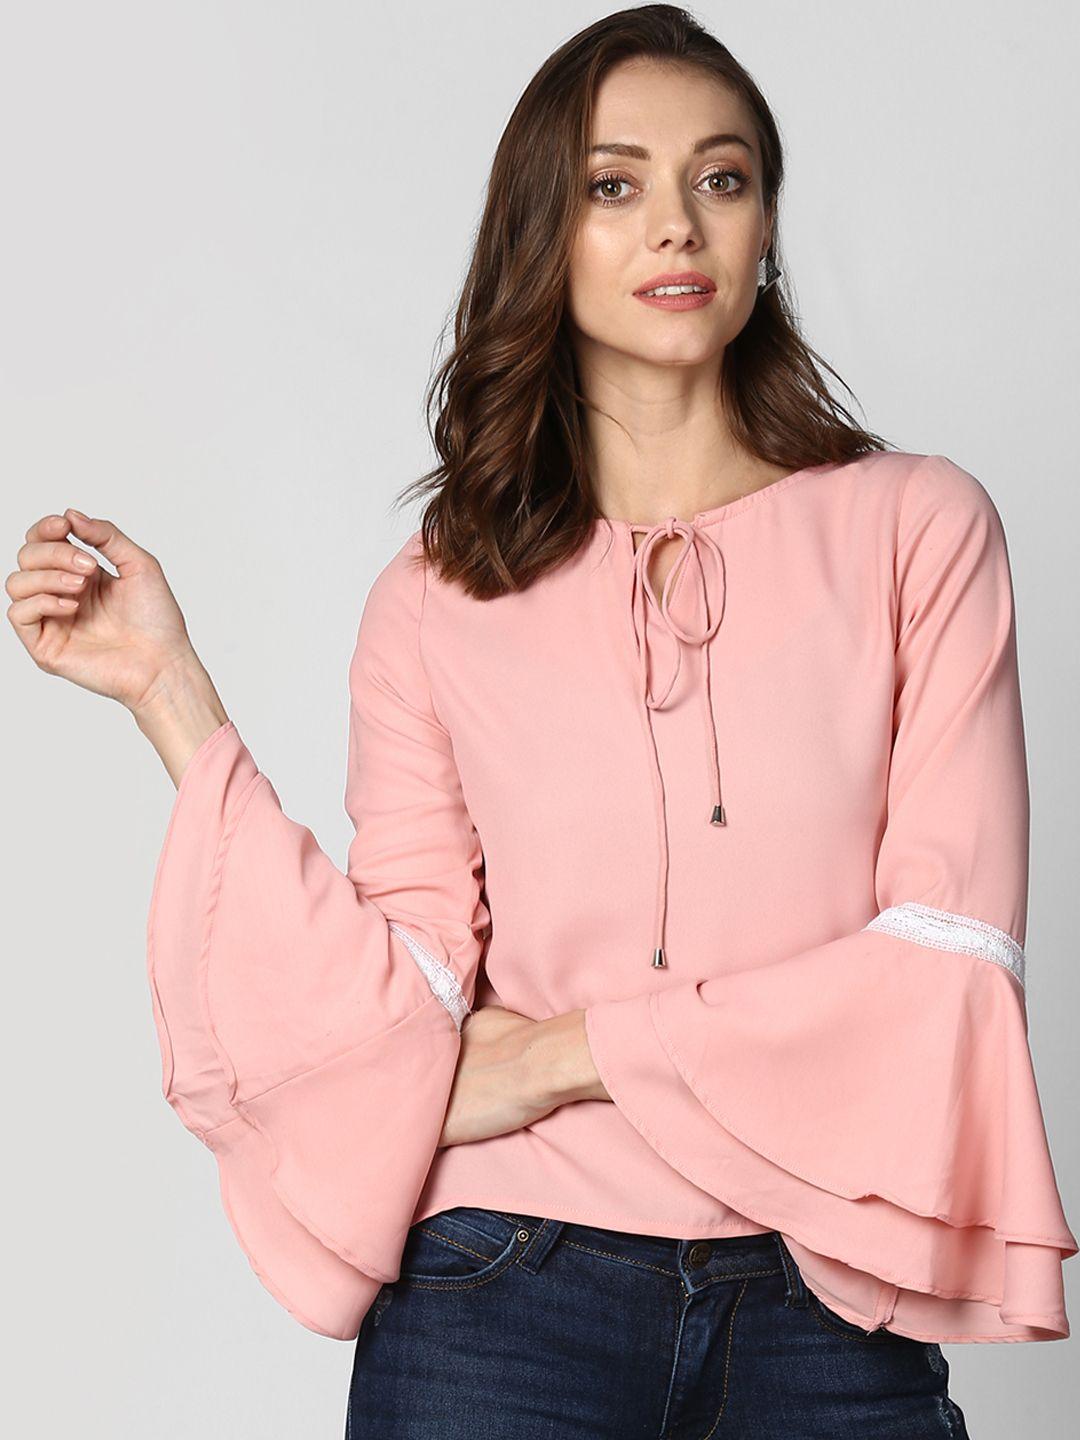 stylestone women pink solid top